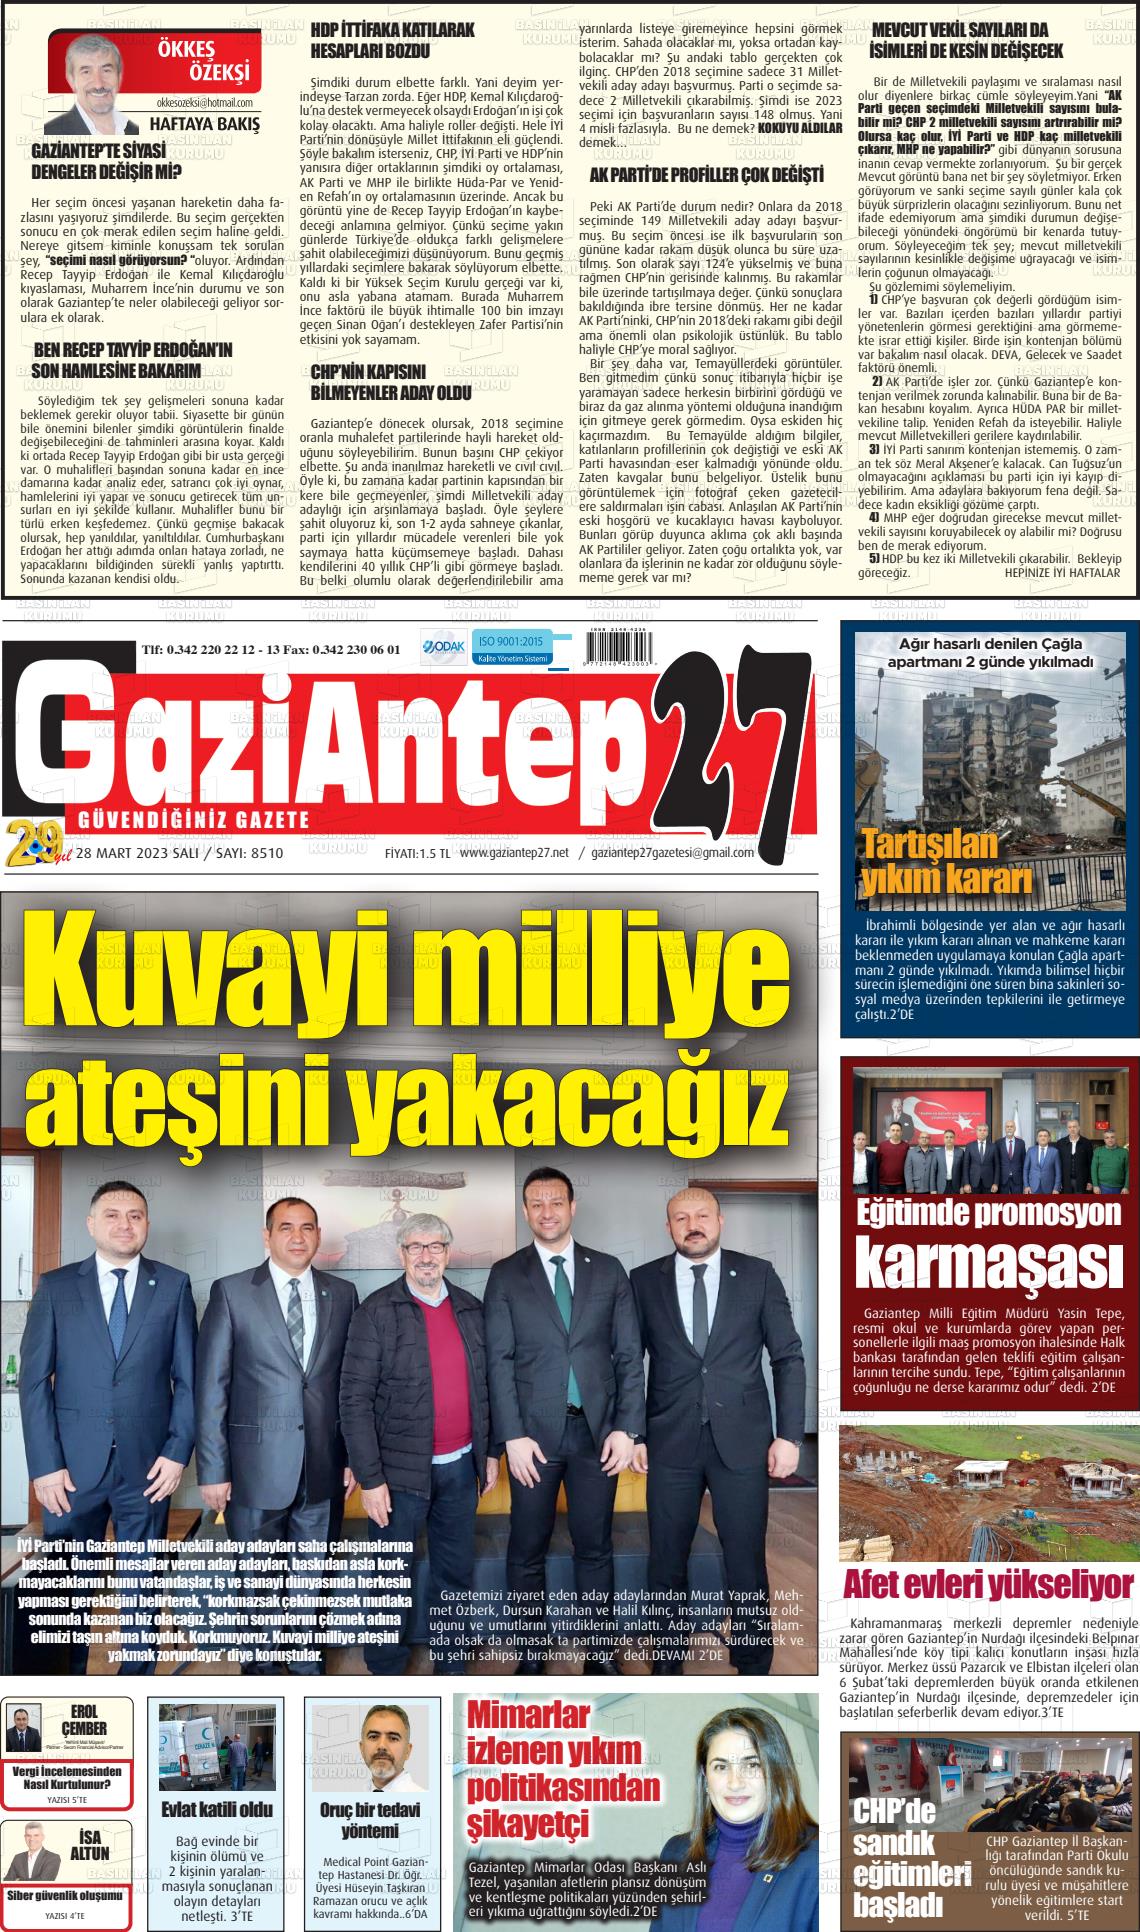 28 Mart 2023 Gaziantep 27 Gazete Manşeti